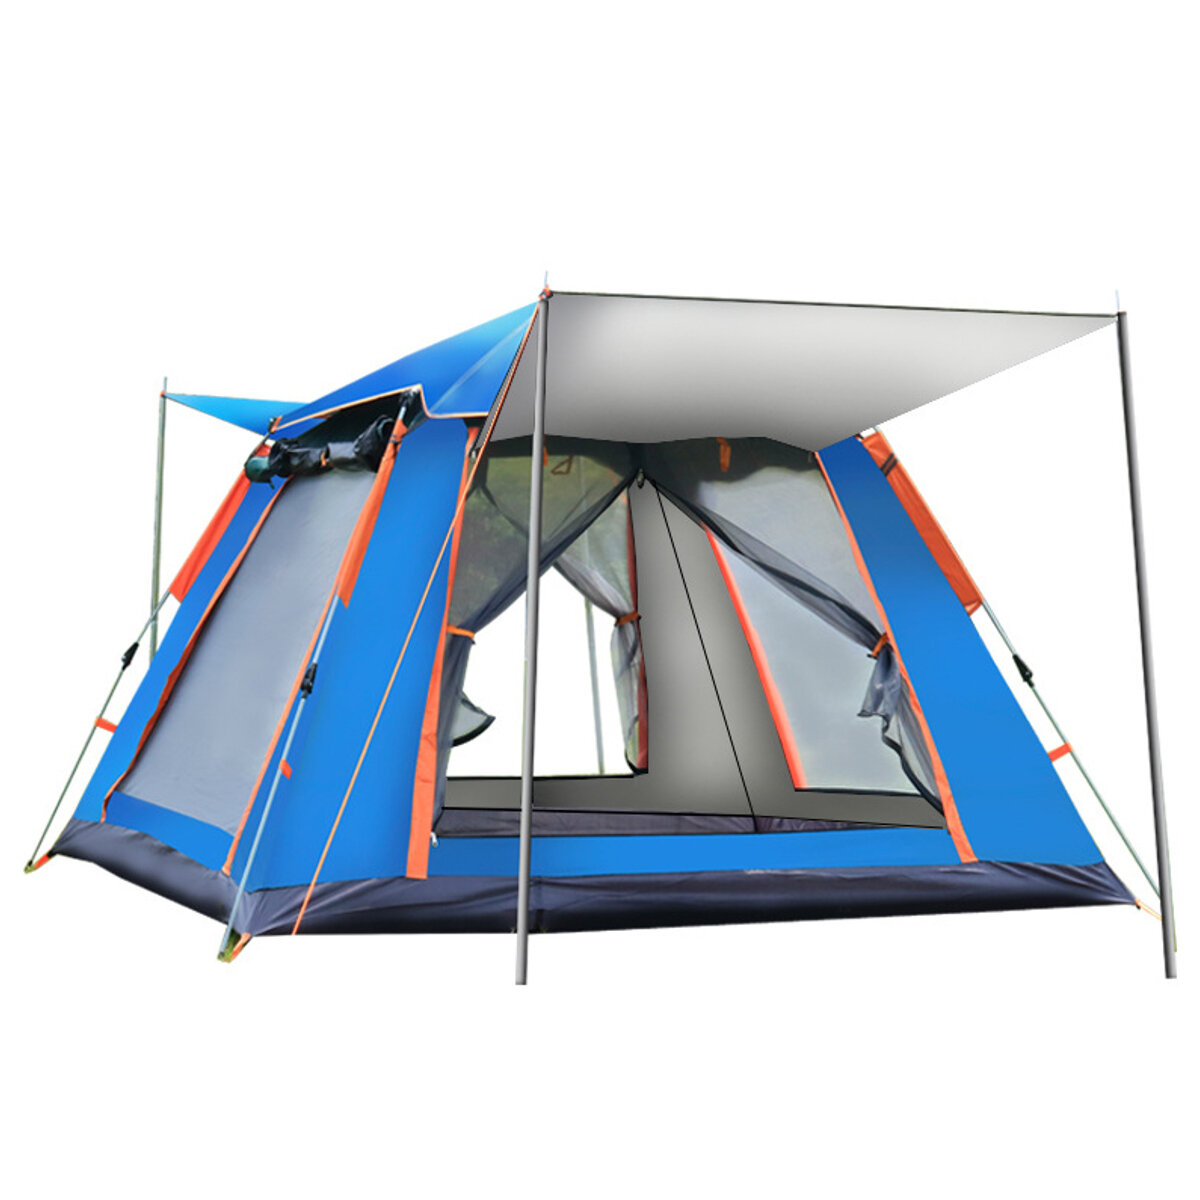 6-7 personen Volautomatische tent Buiten Camping Familie Picknick Reizen Regendichte winddichte tent